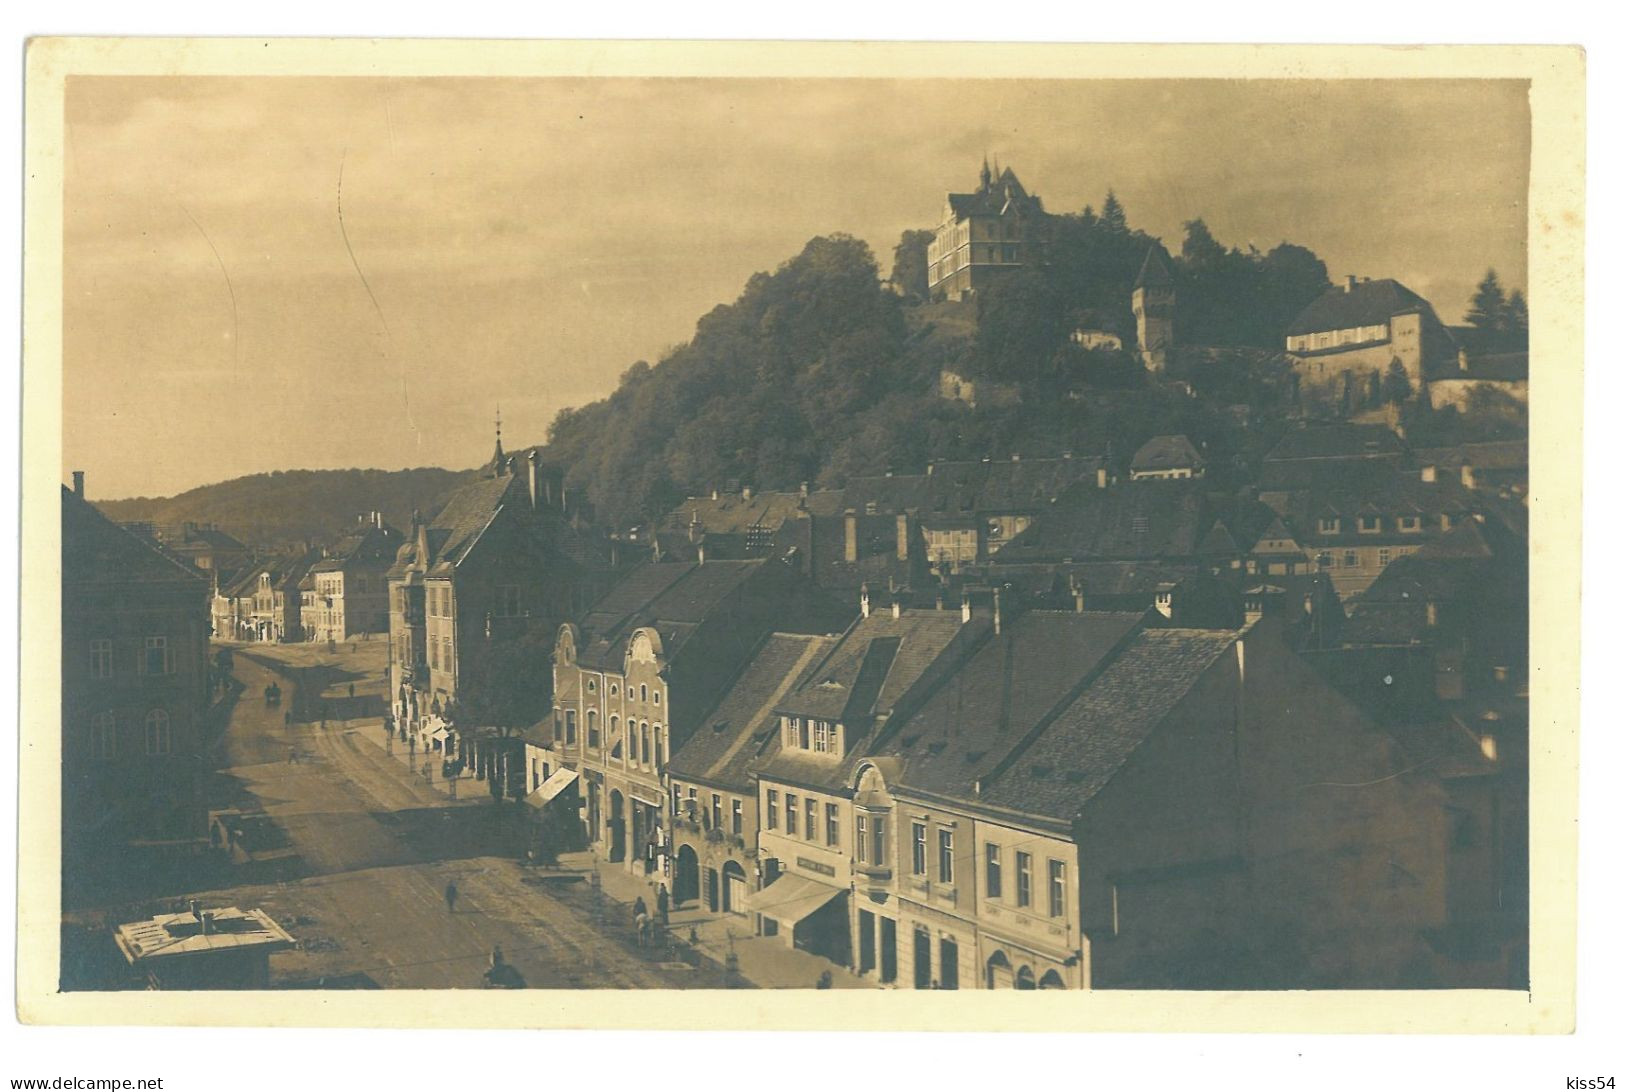 RO - 25188 SIGHISOARA, Mures, Panorama, Romania - Old Postcard, Real Photo - Unused - 1931 - Romania